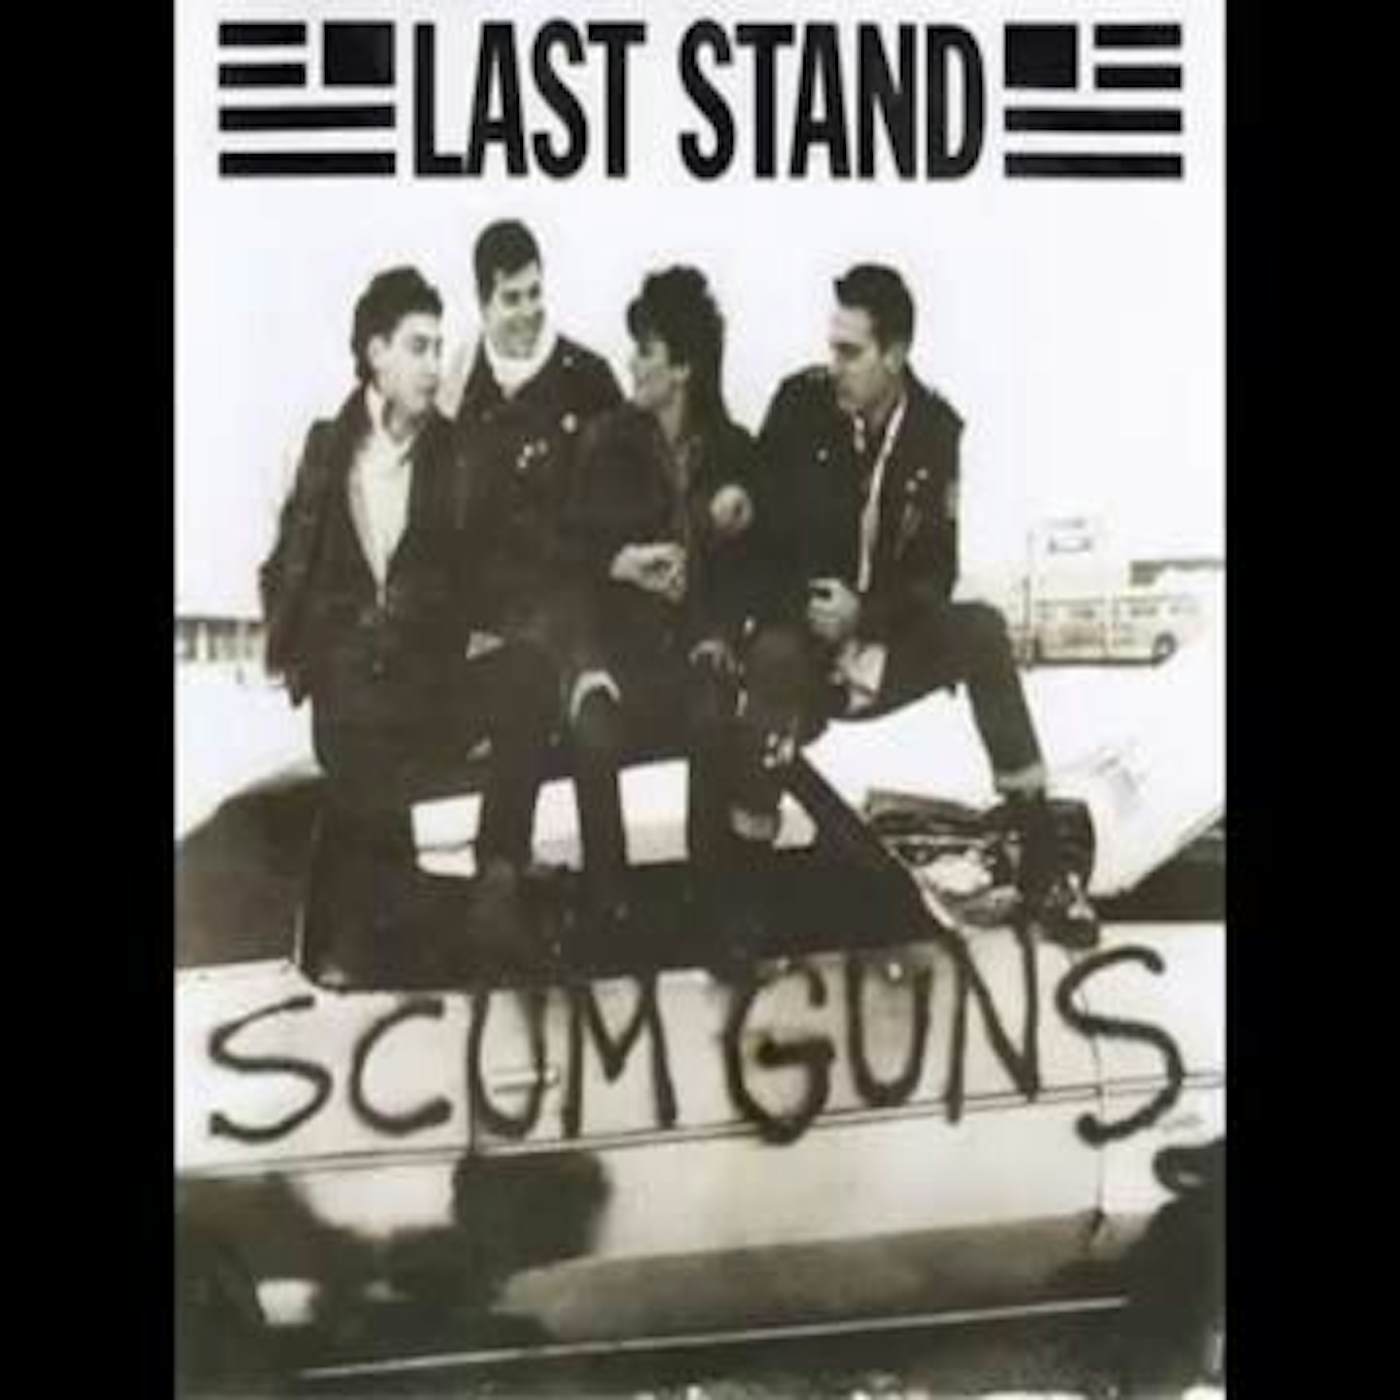 Last Stand SCUM GUNS Vinyl Record